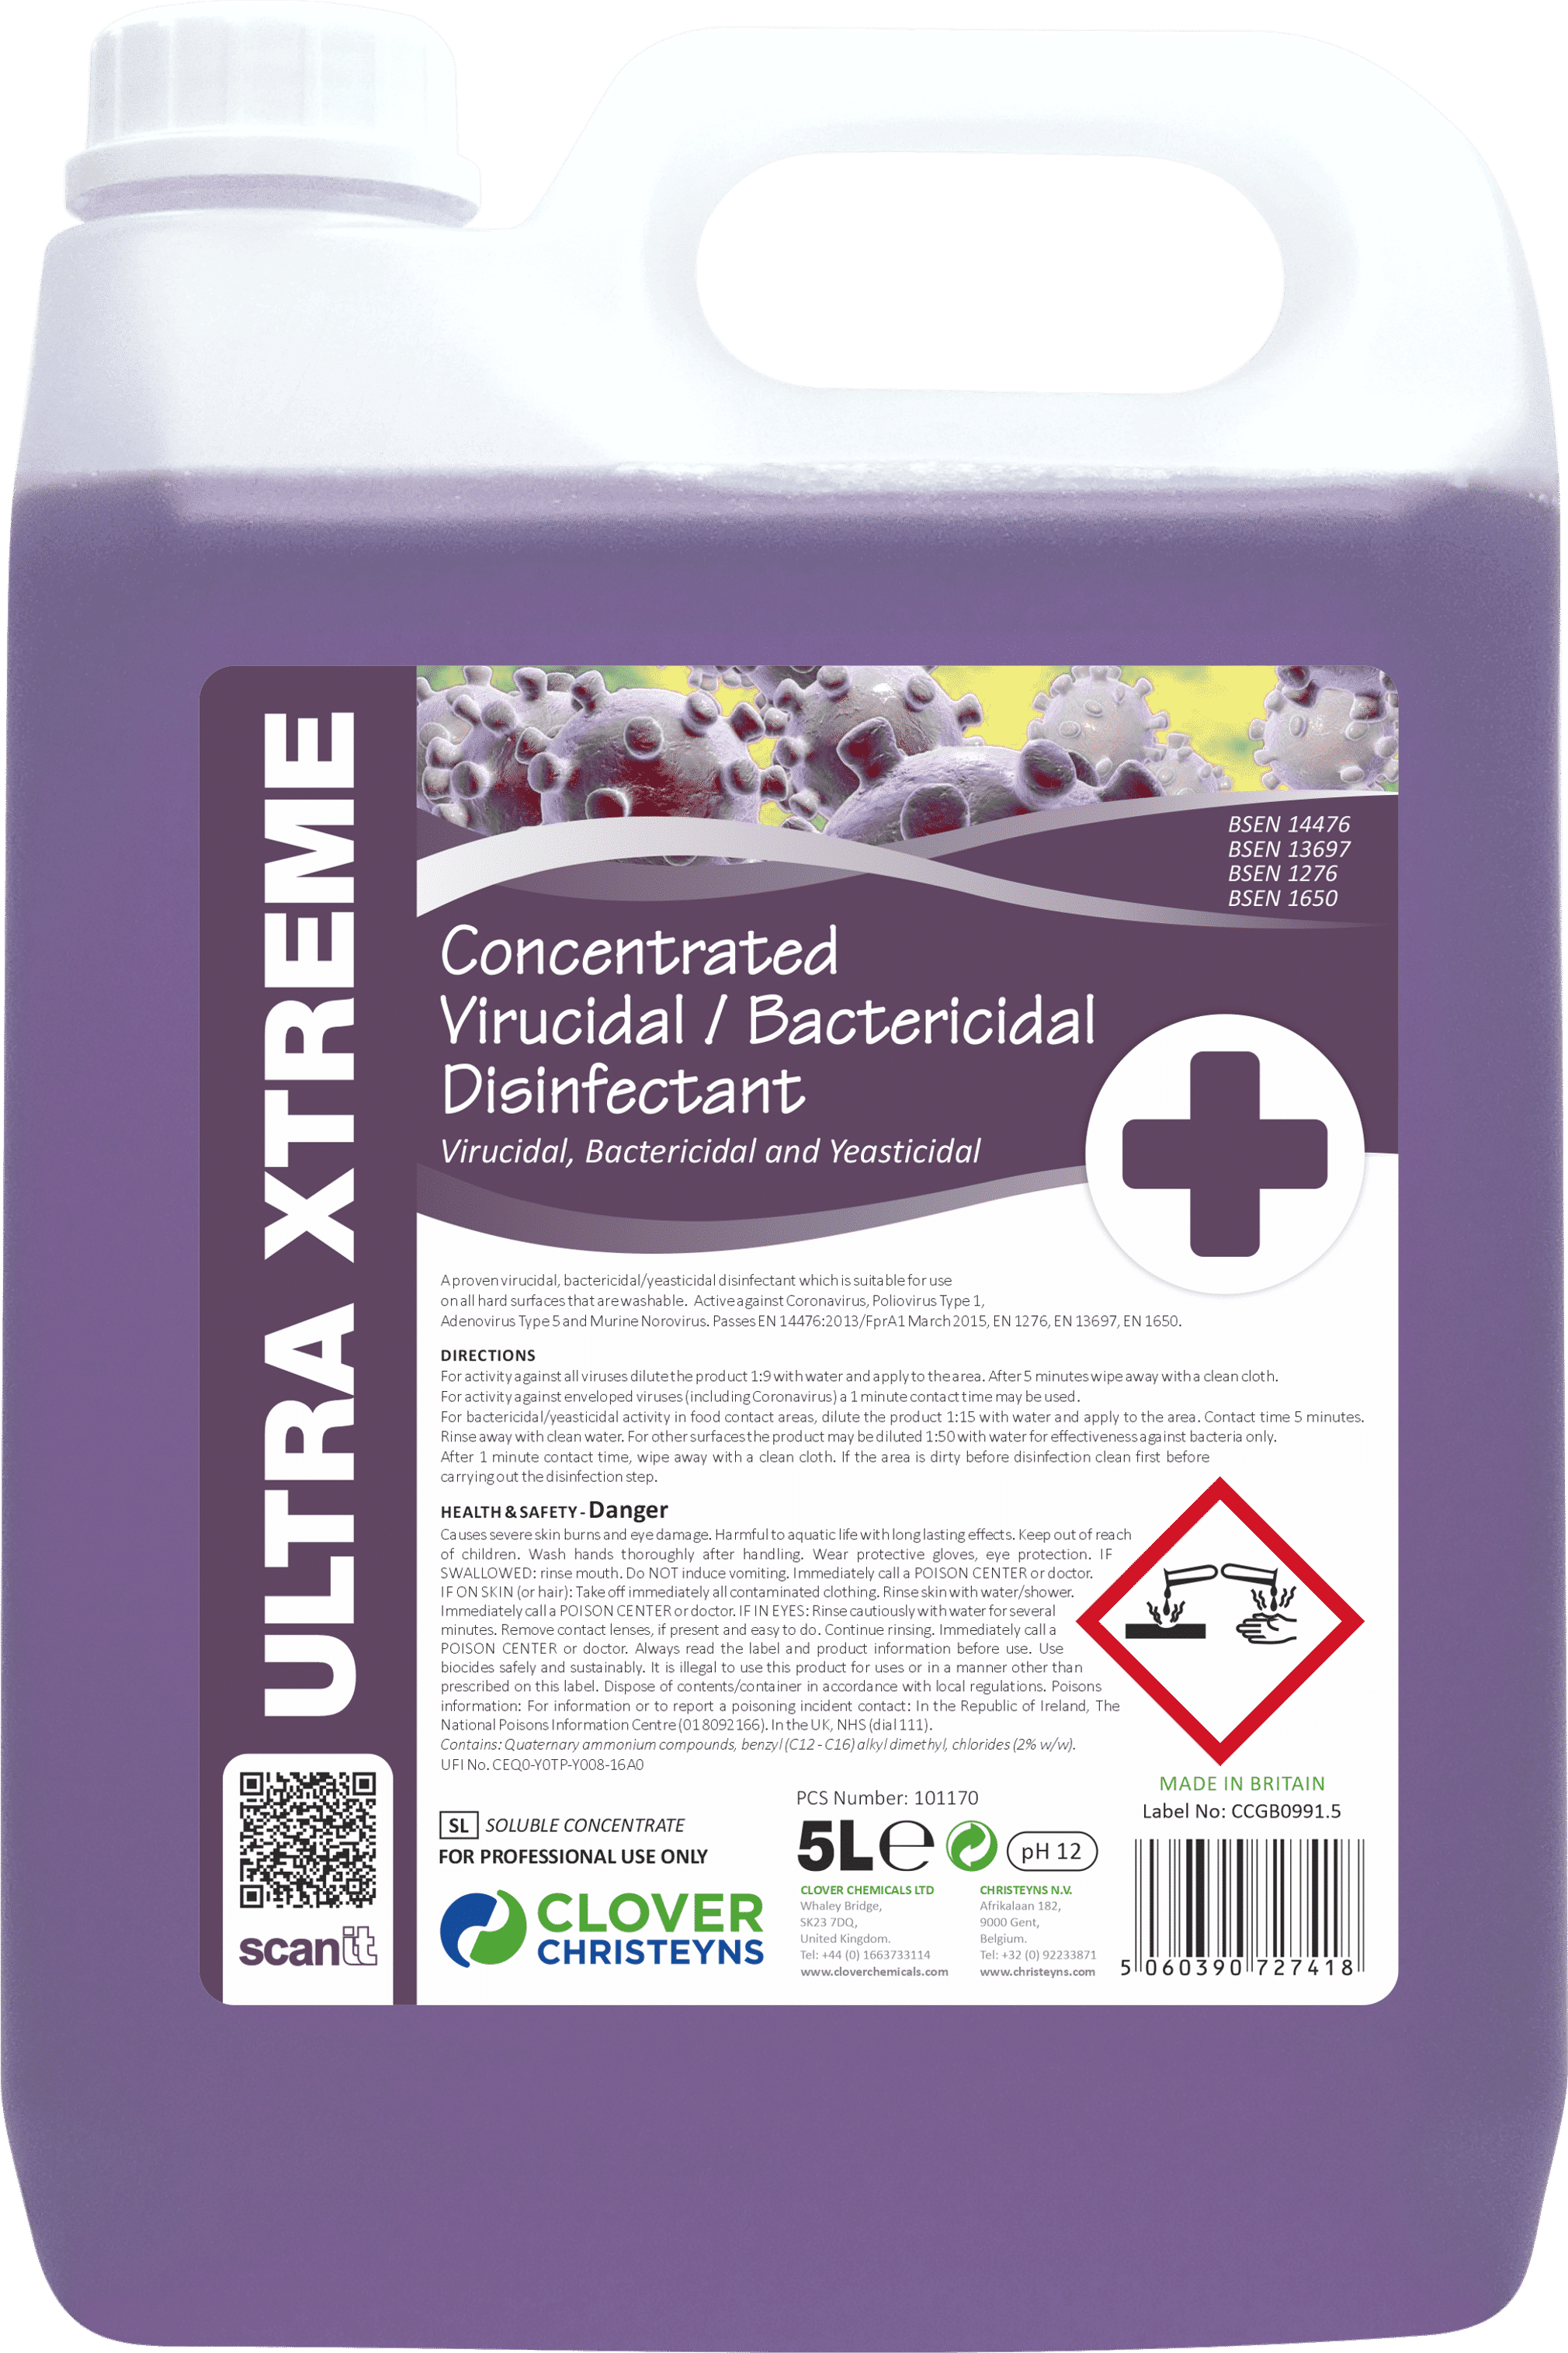 Clover Bactericidal/Disinfectants